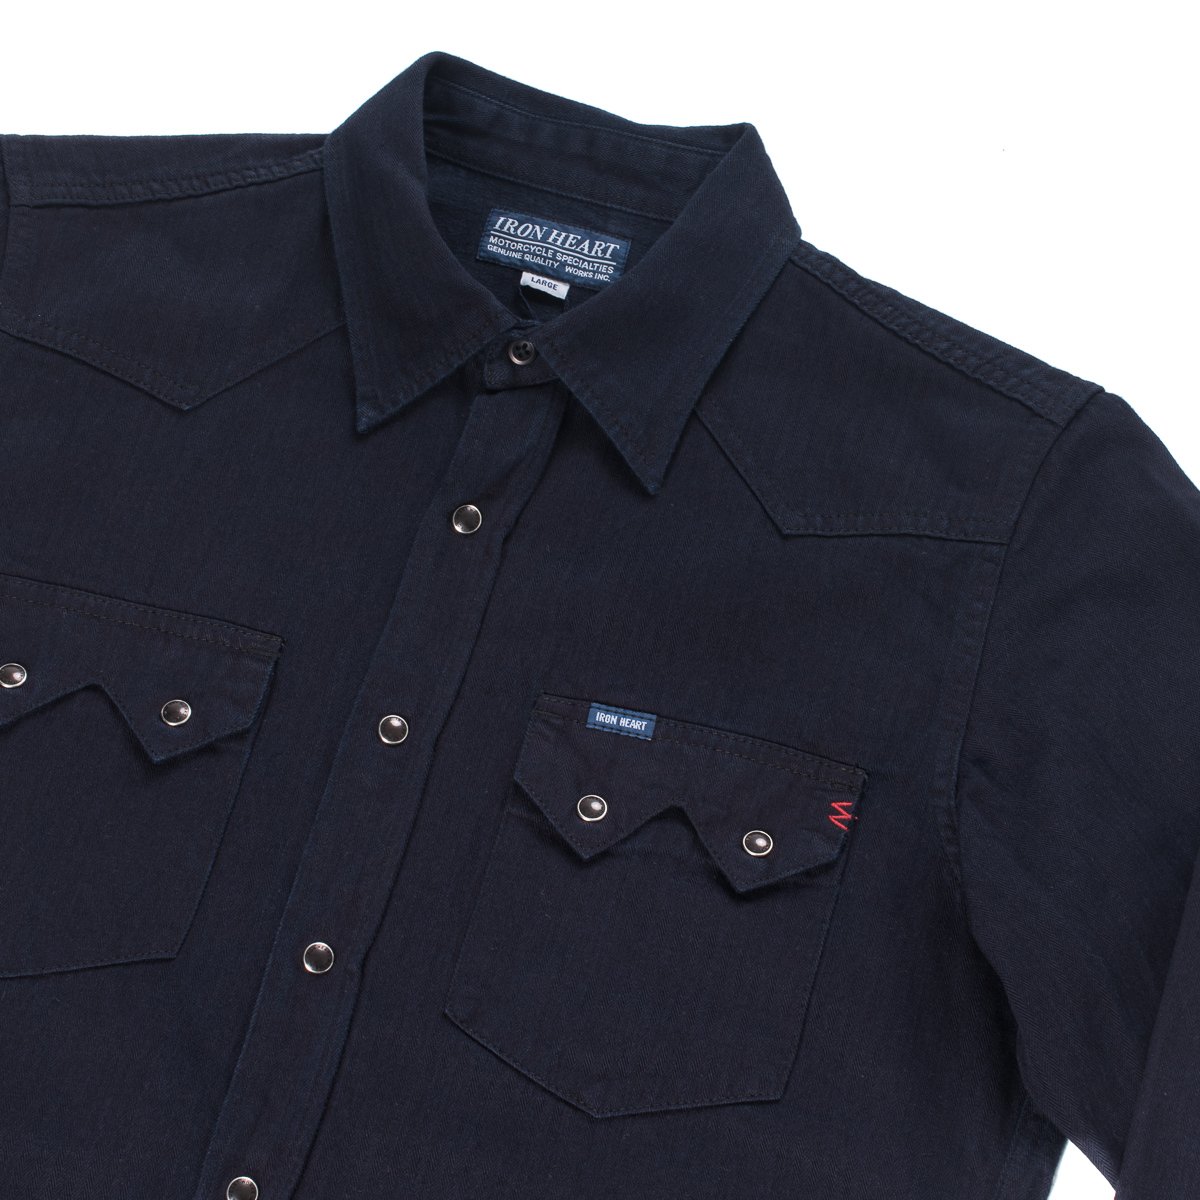 Iron Heart Cotton Linen Indigo Dyed Sawtooth Shirt IHSH-198